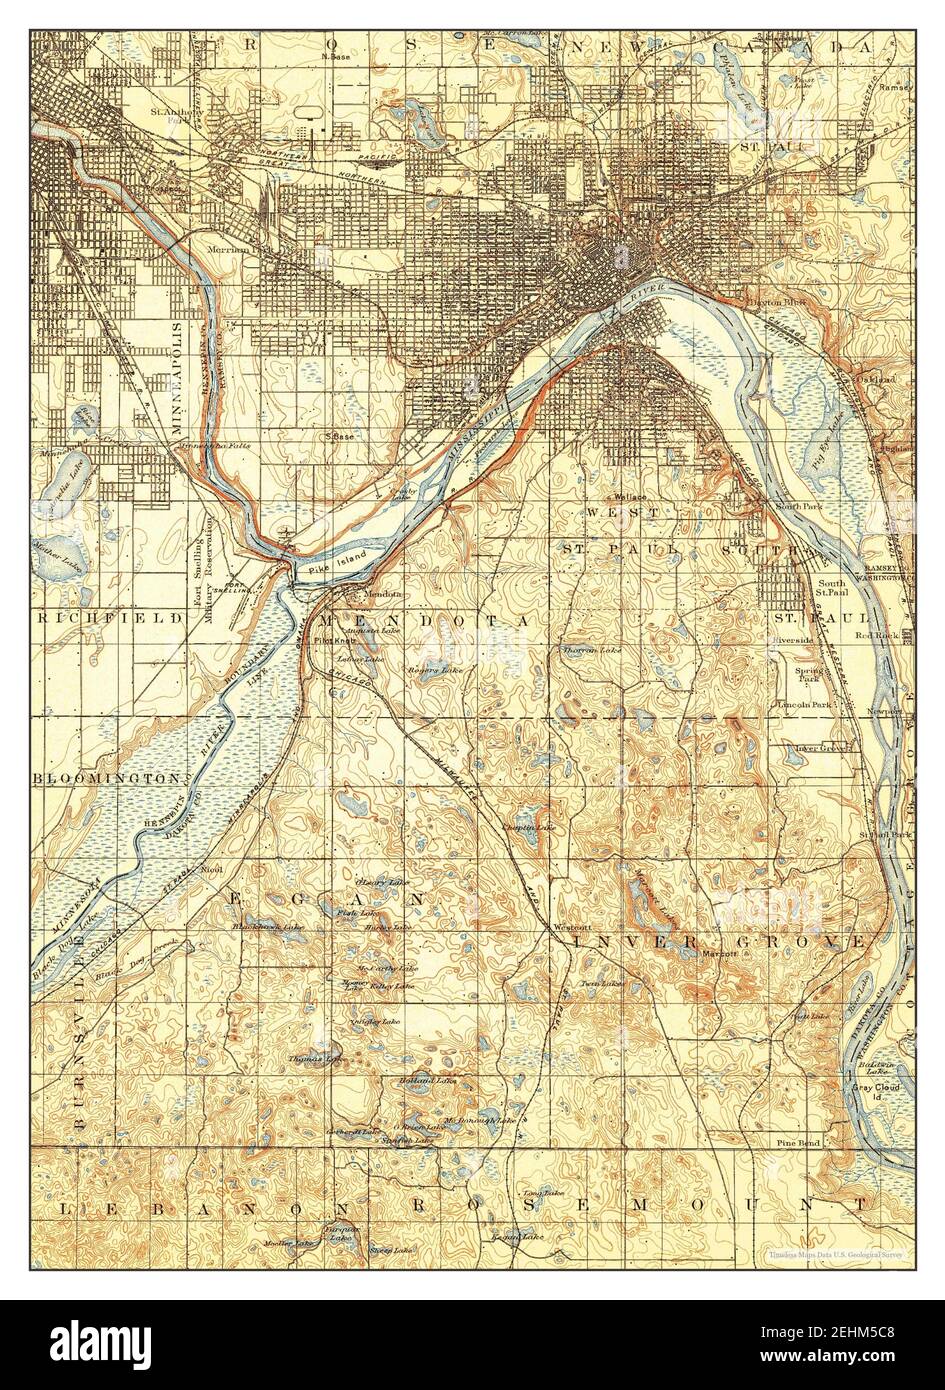 St Paul, Minnesota, map 1896, 1:62500, United States of America by Timeless  Maps, data U.S. Geological Survey Stock Photo - Alamy